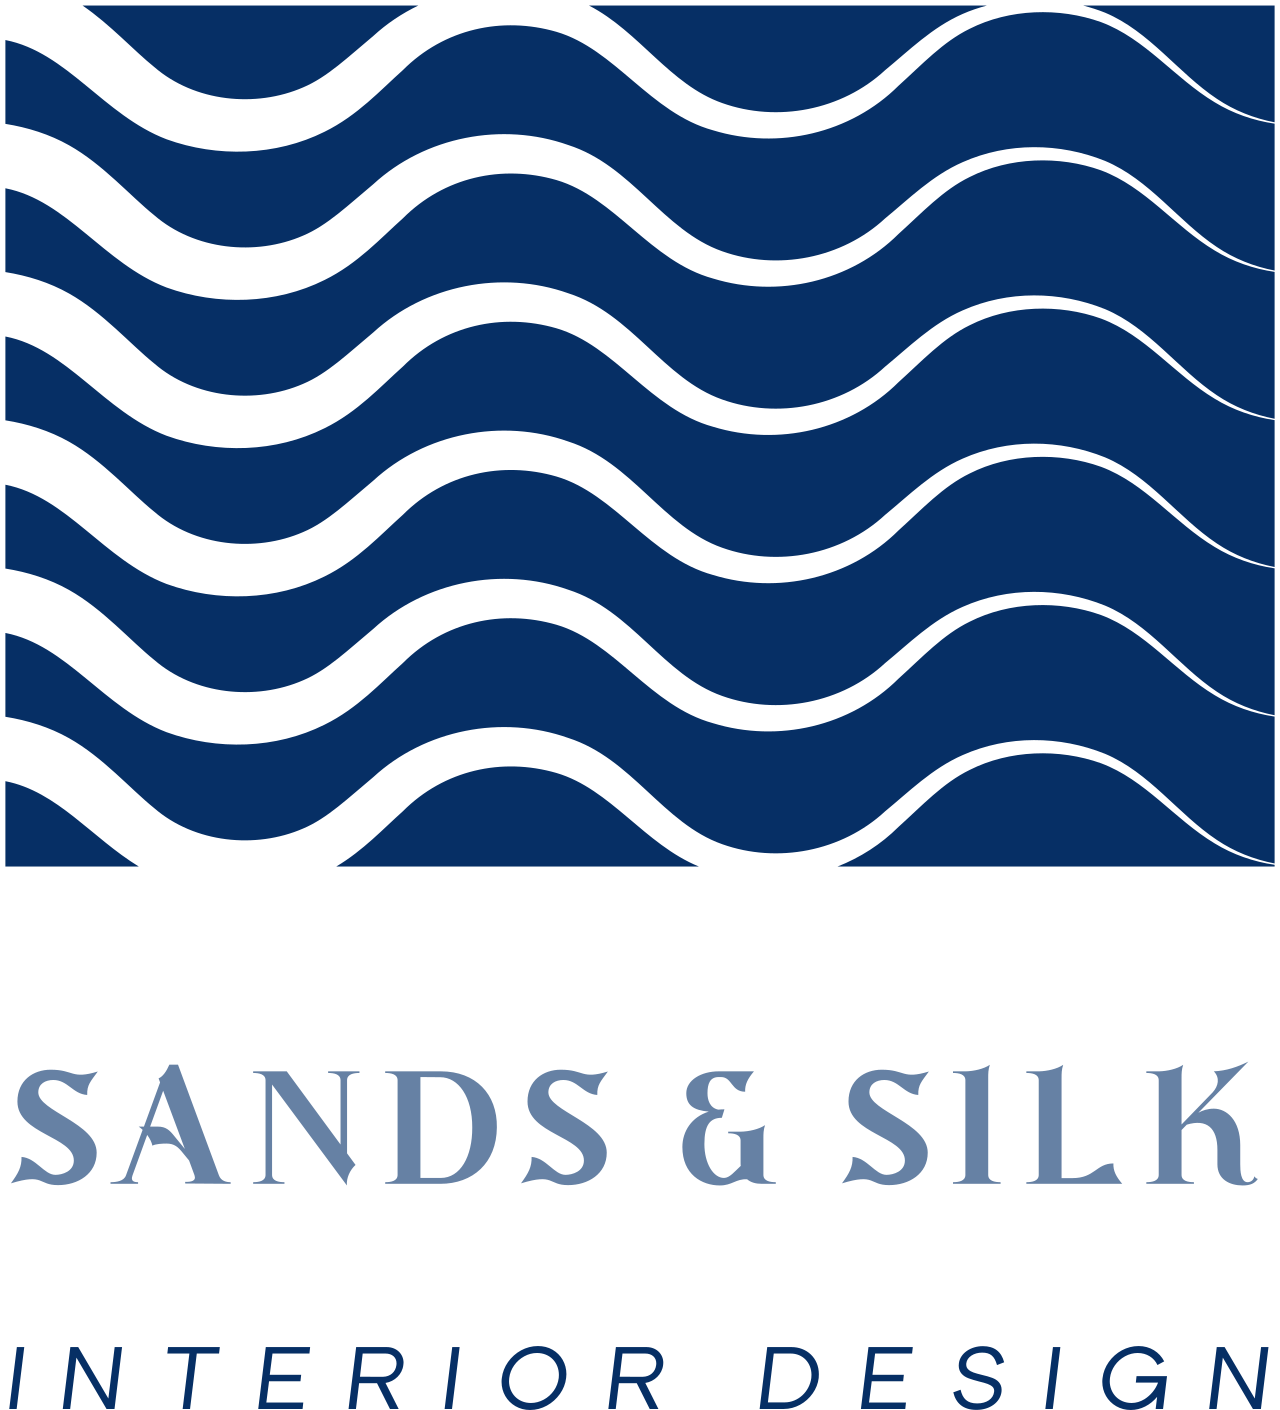 SANDS & SILK's logo